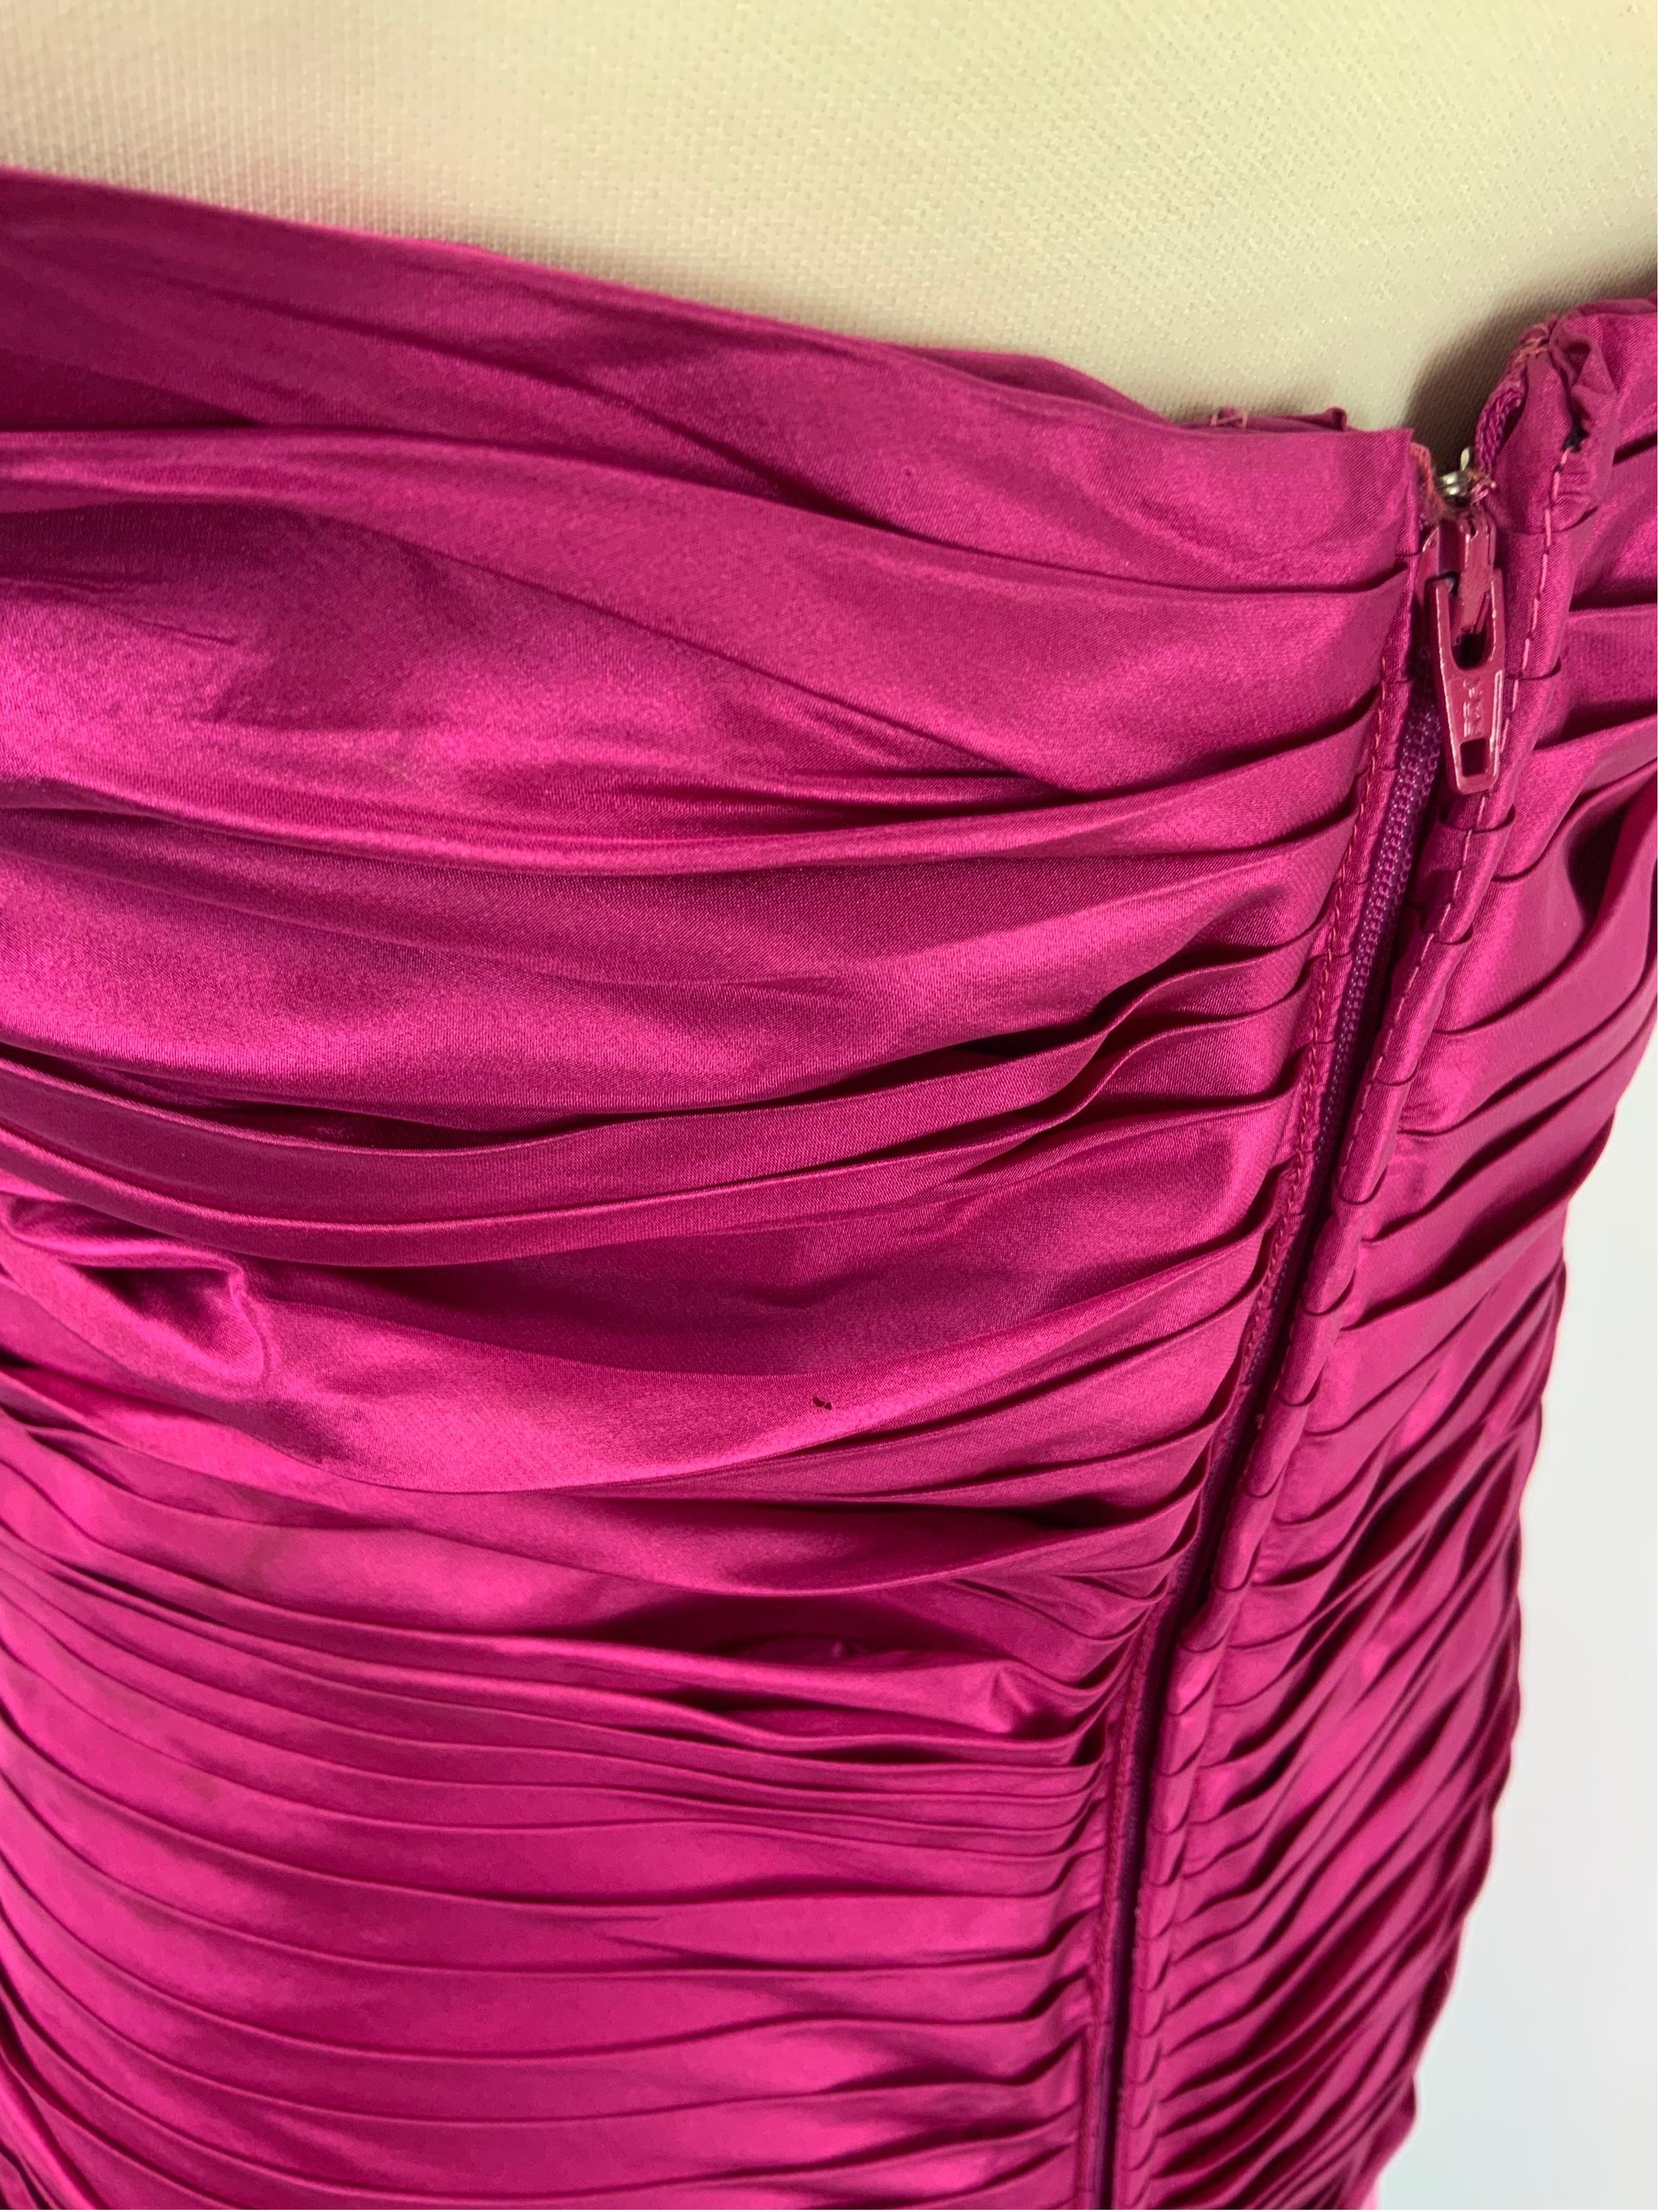 Roxy vintage night pink dress For Sale 2